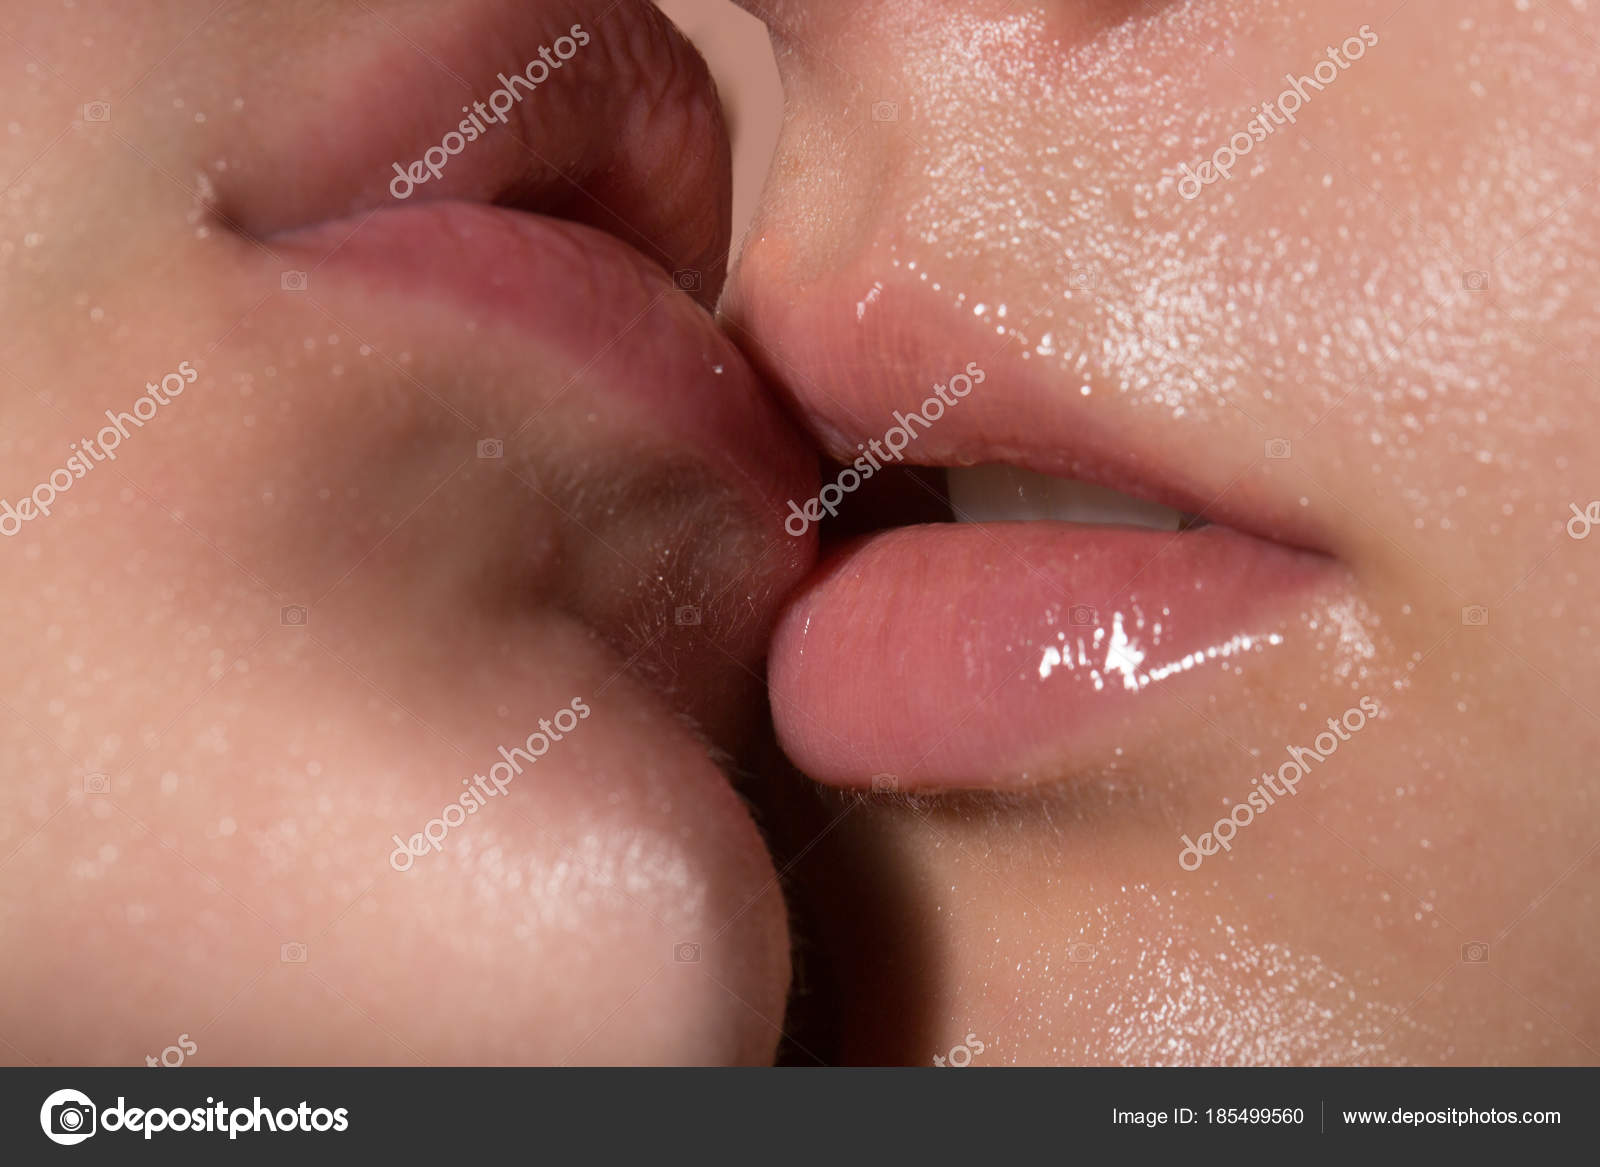 Hot Lesbians Kissing Naked